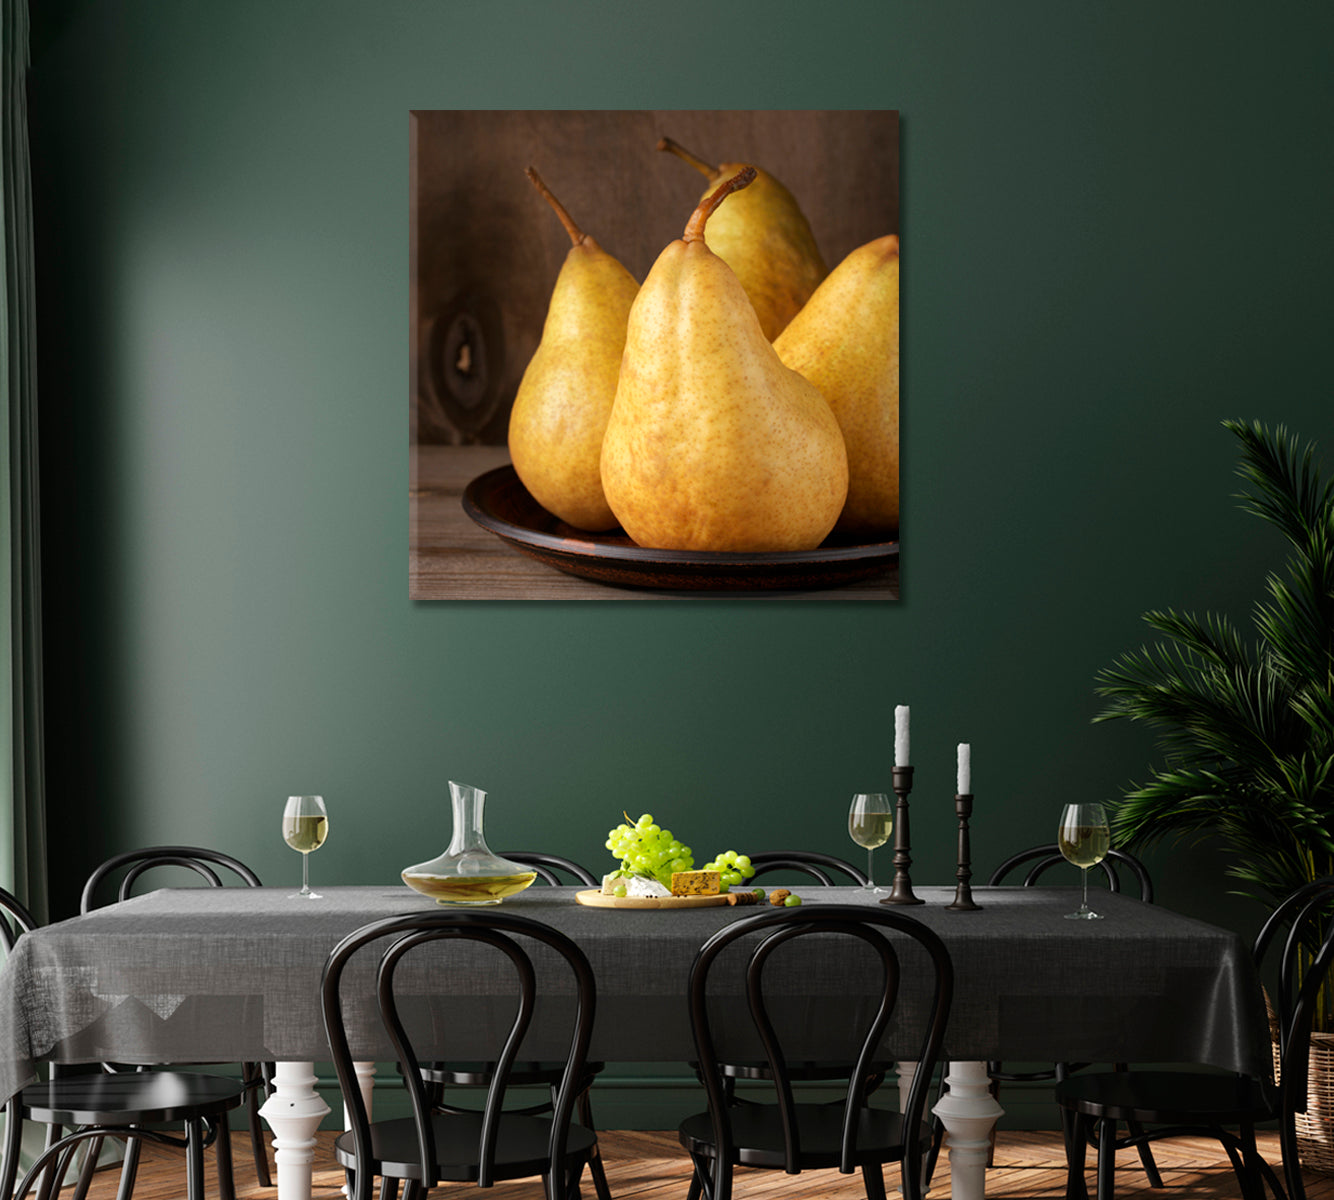 Ripe Pears Canvas Print-Canvas Print-CetArt-1 panel-12x12 inches-CetArt